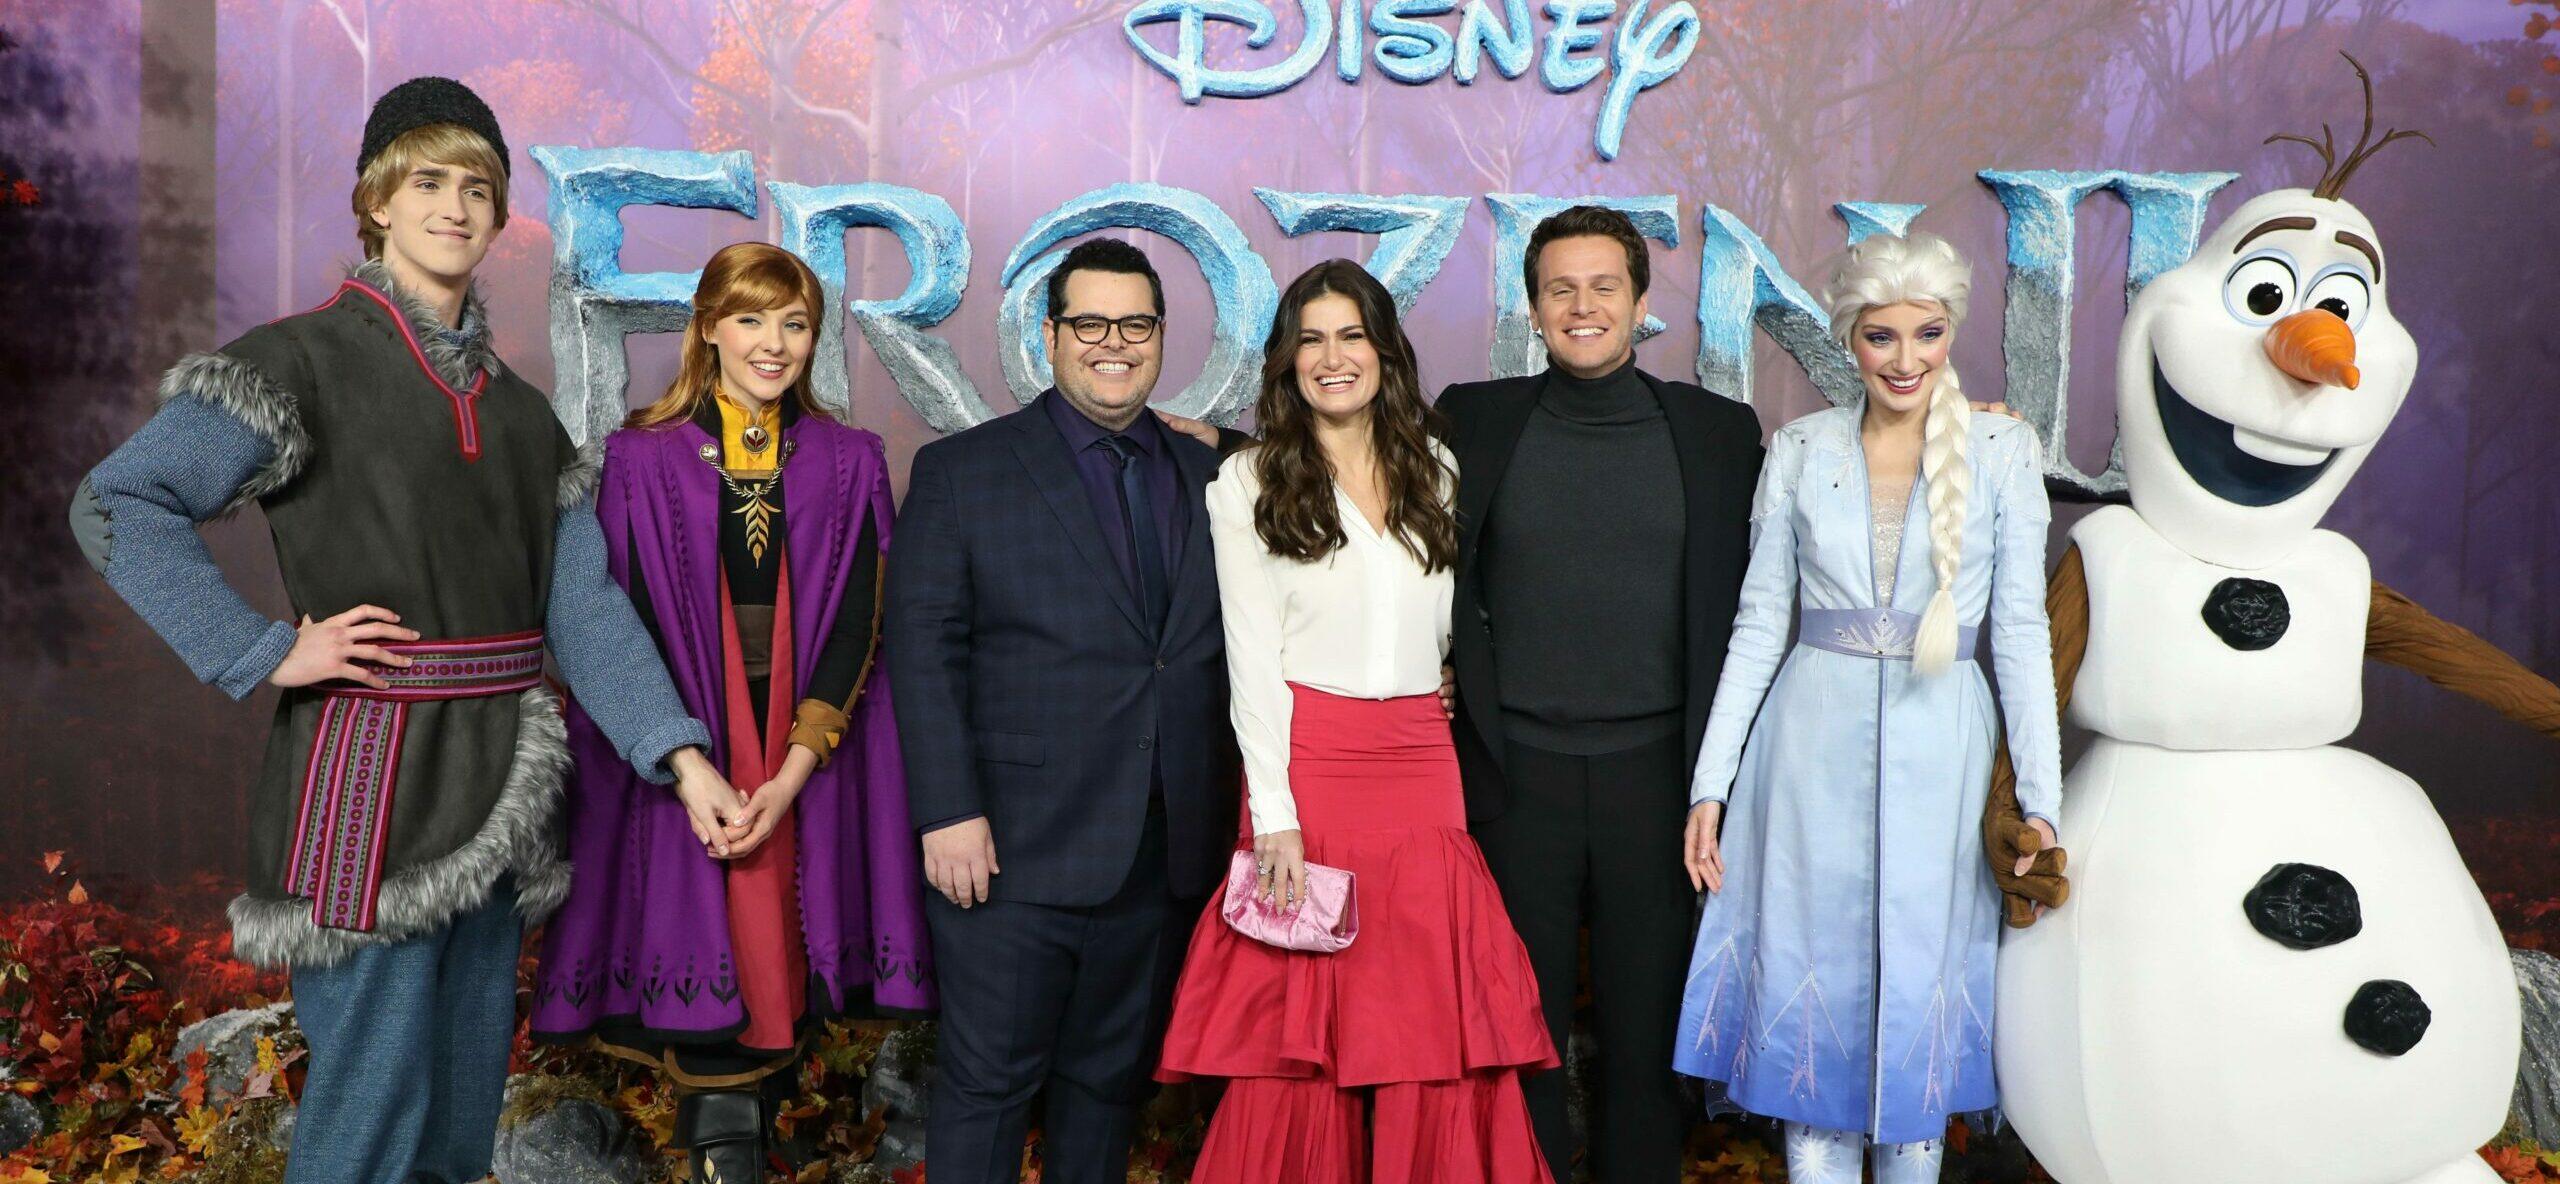 Disney Confirms ‘Frozen’ Sequel In The Works: Josh Gad Speaks Out